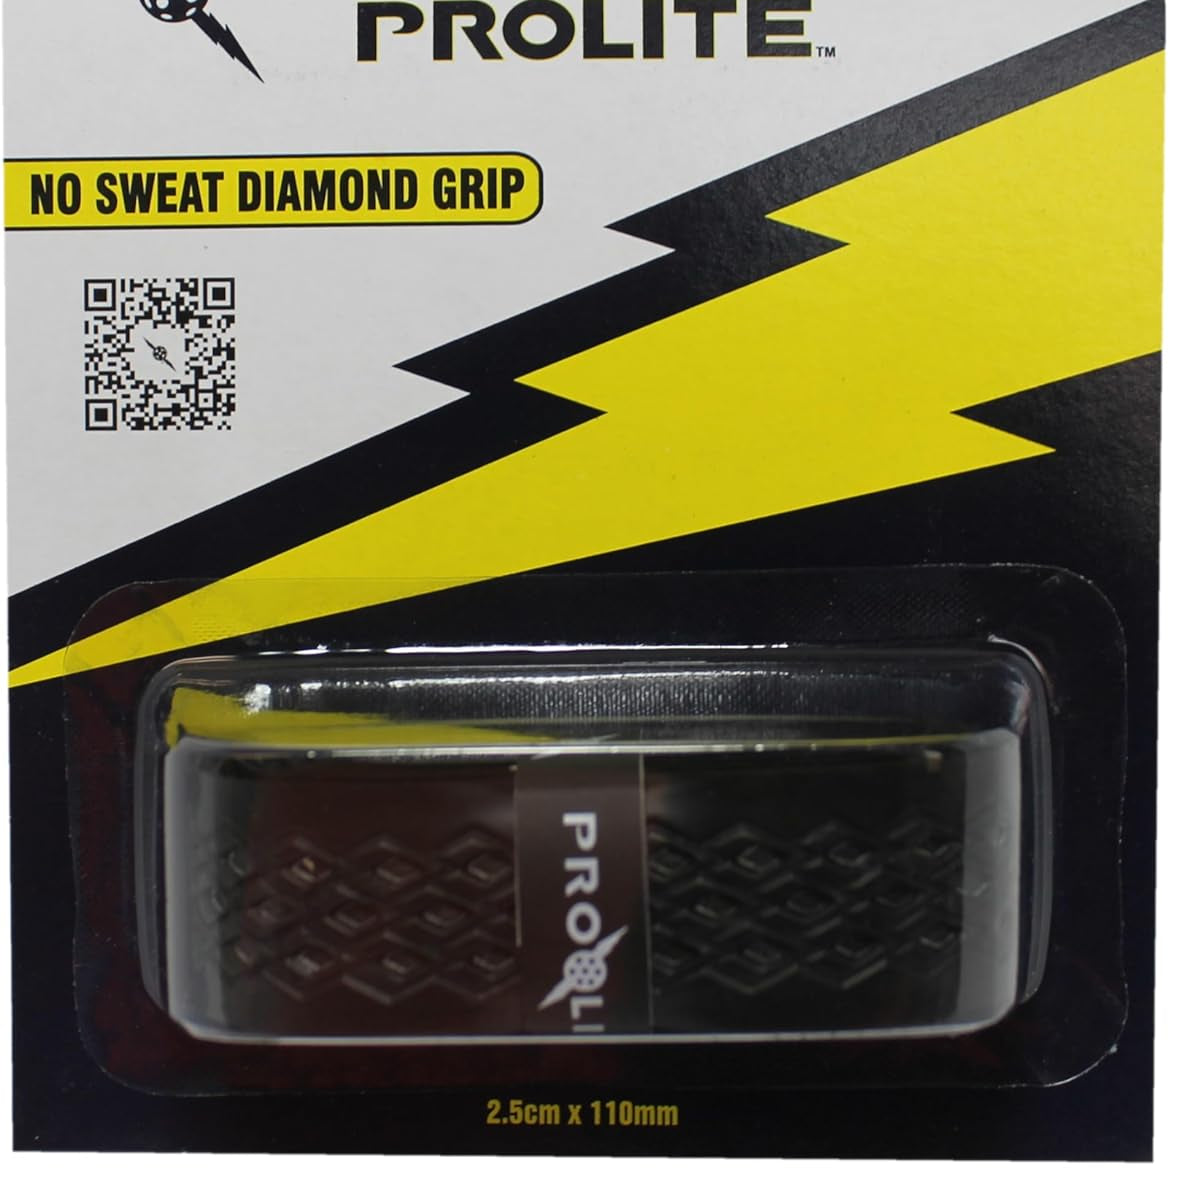 Prolite No Sweat Diamond Grip